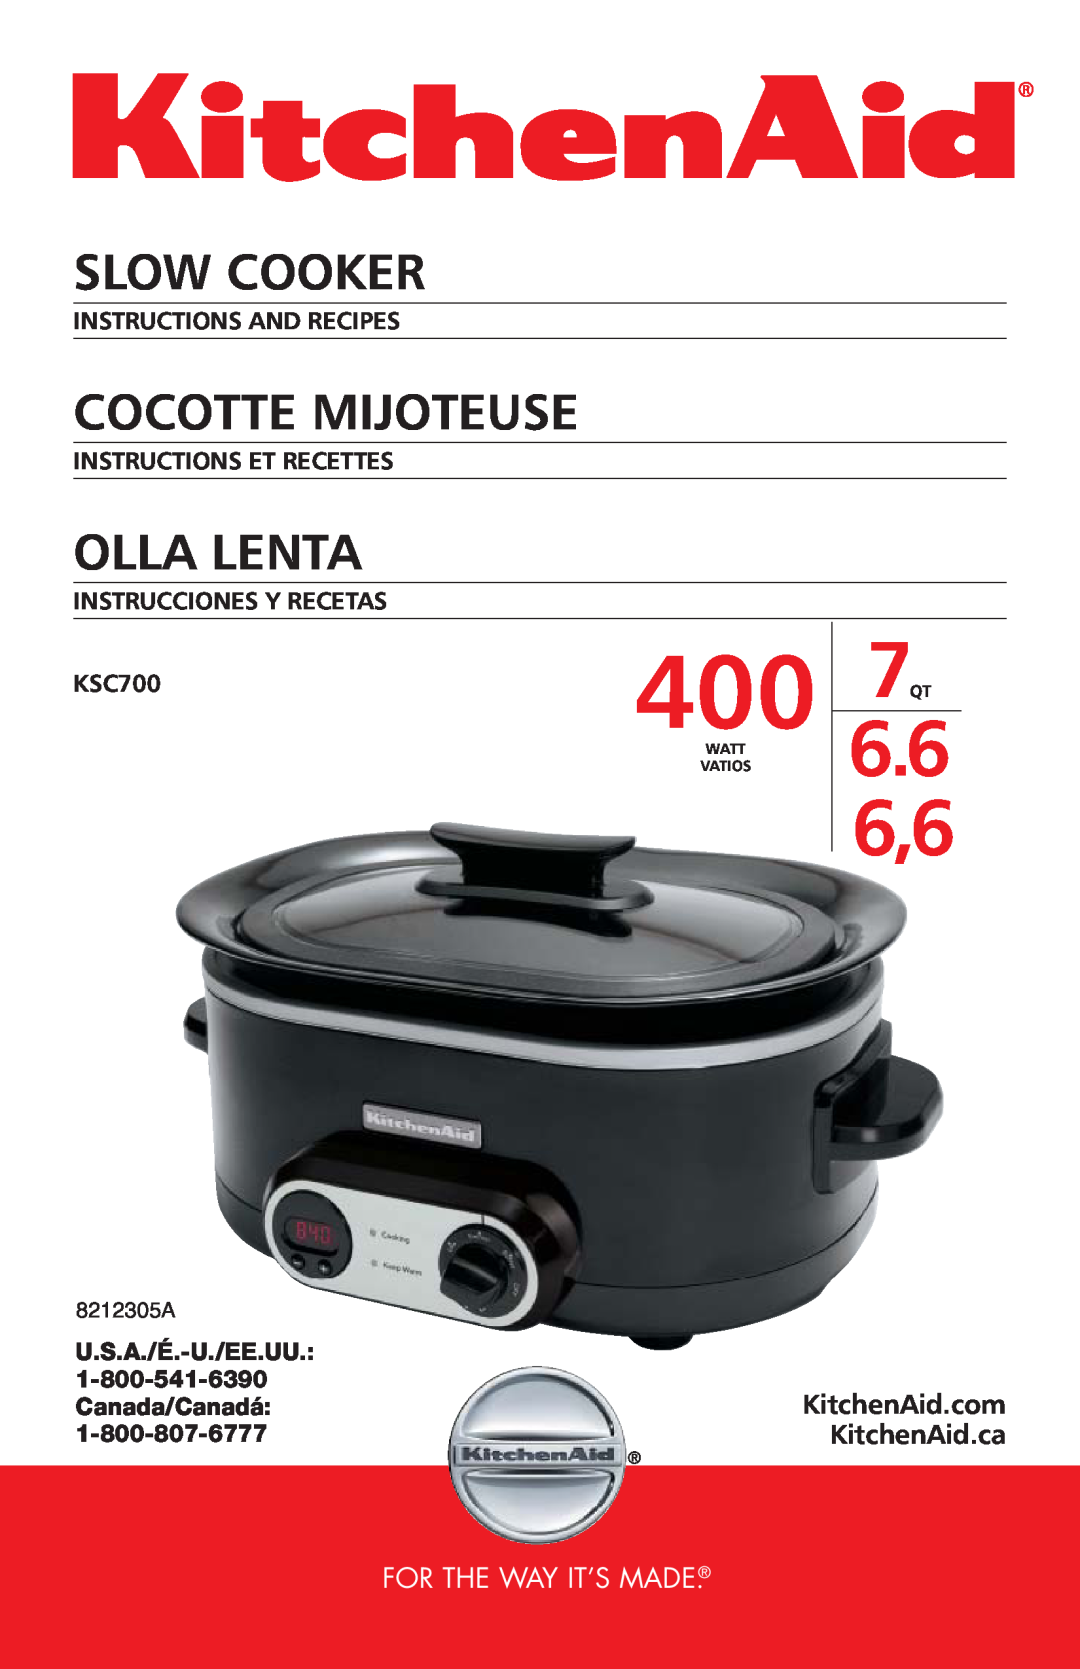 KitchenAid KSC700 manual For The Way It’S Made, 6.6 6,6, Slow Cooker, Cocotte Mijoteuse, Olla Lenta, Watt Vatios 